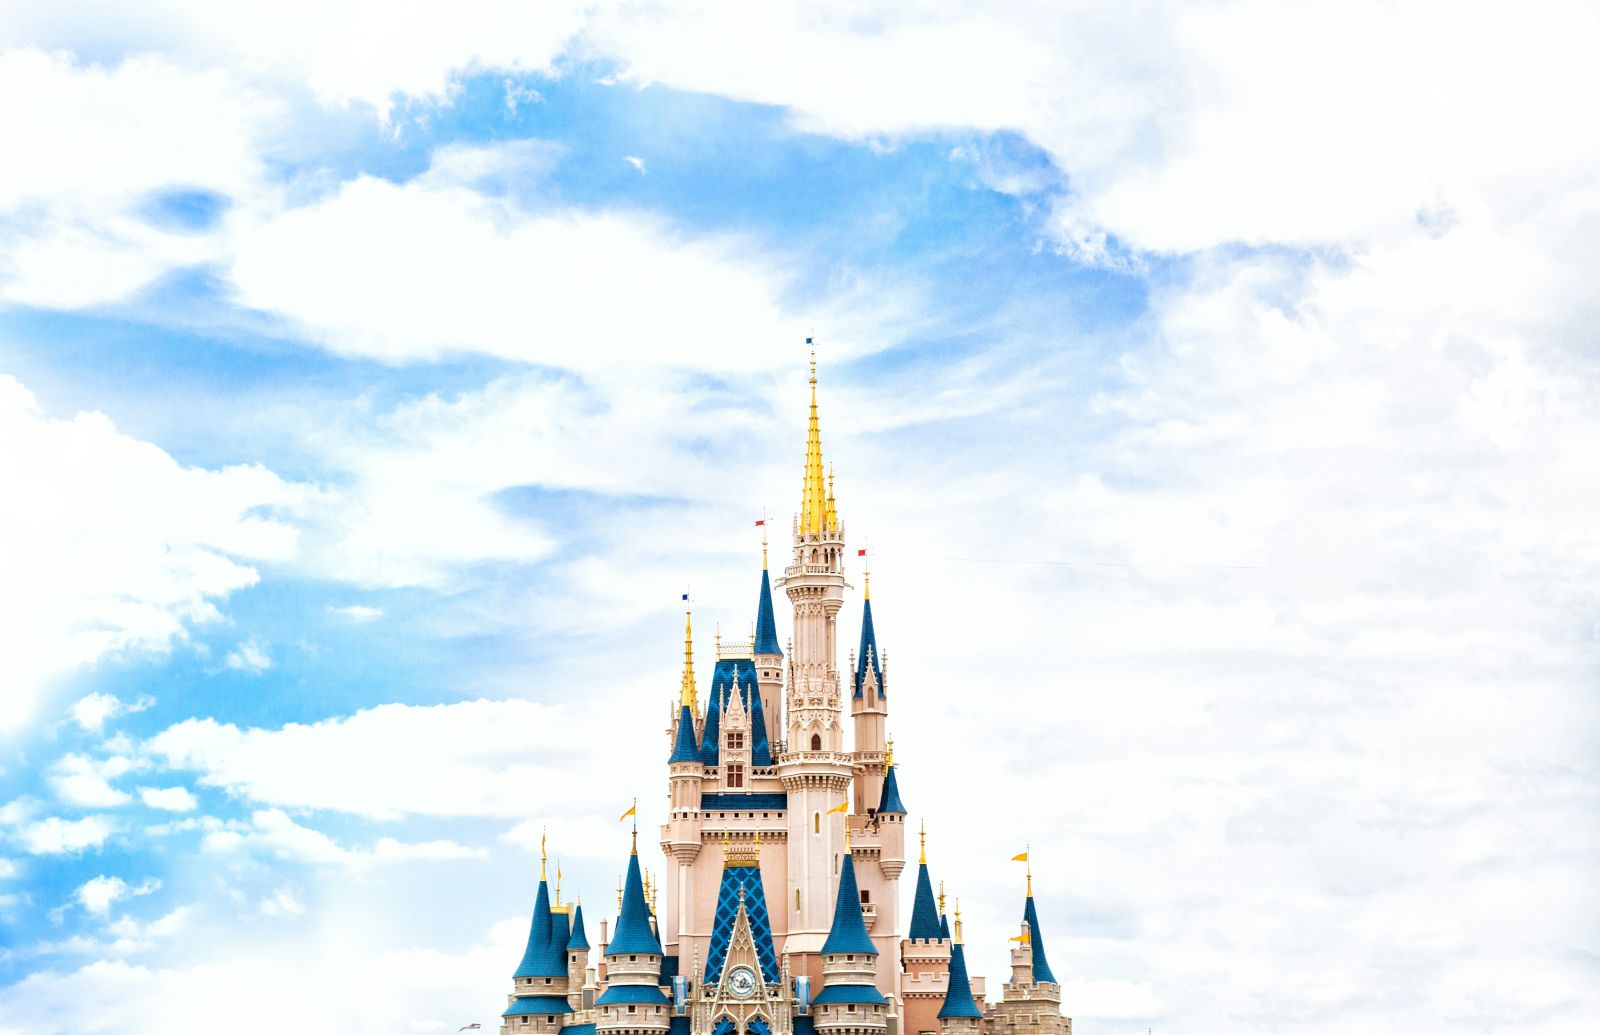 Consumer Products - Disney castle by Thomas Kelley via Unsplash